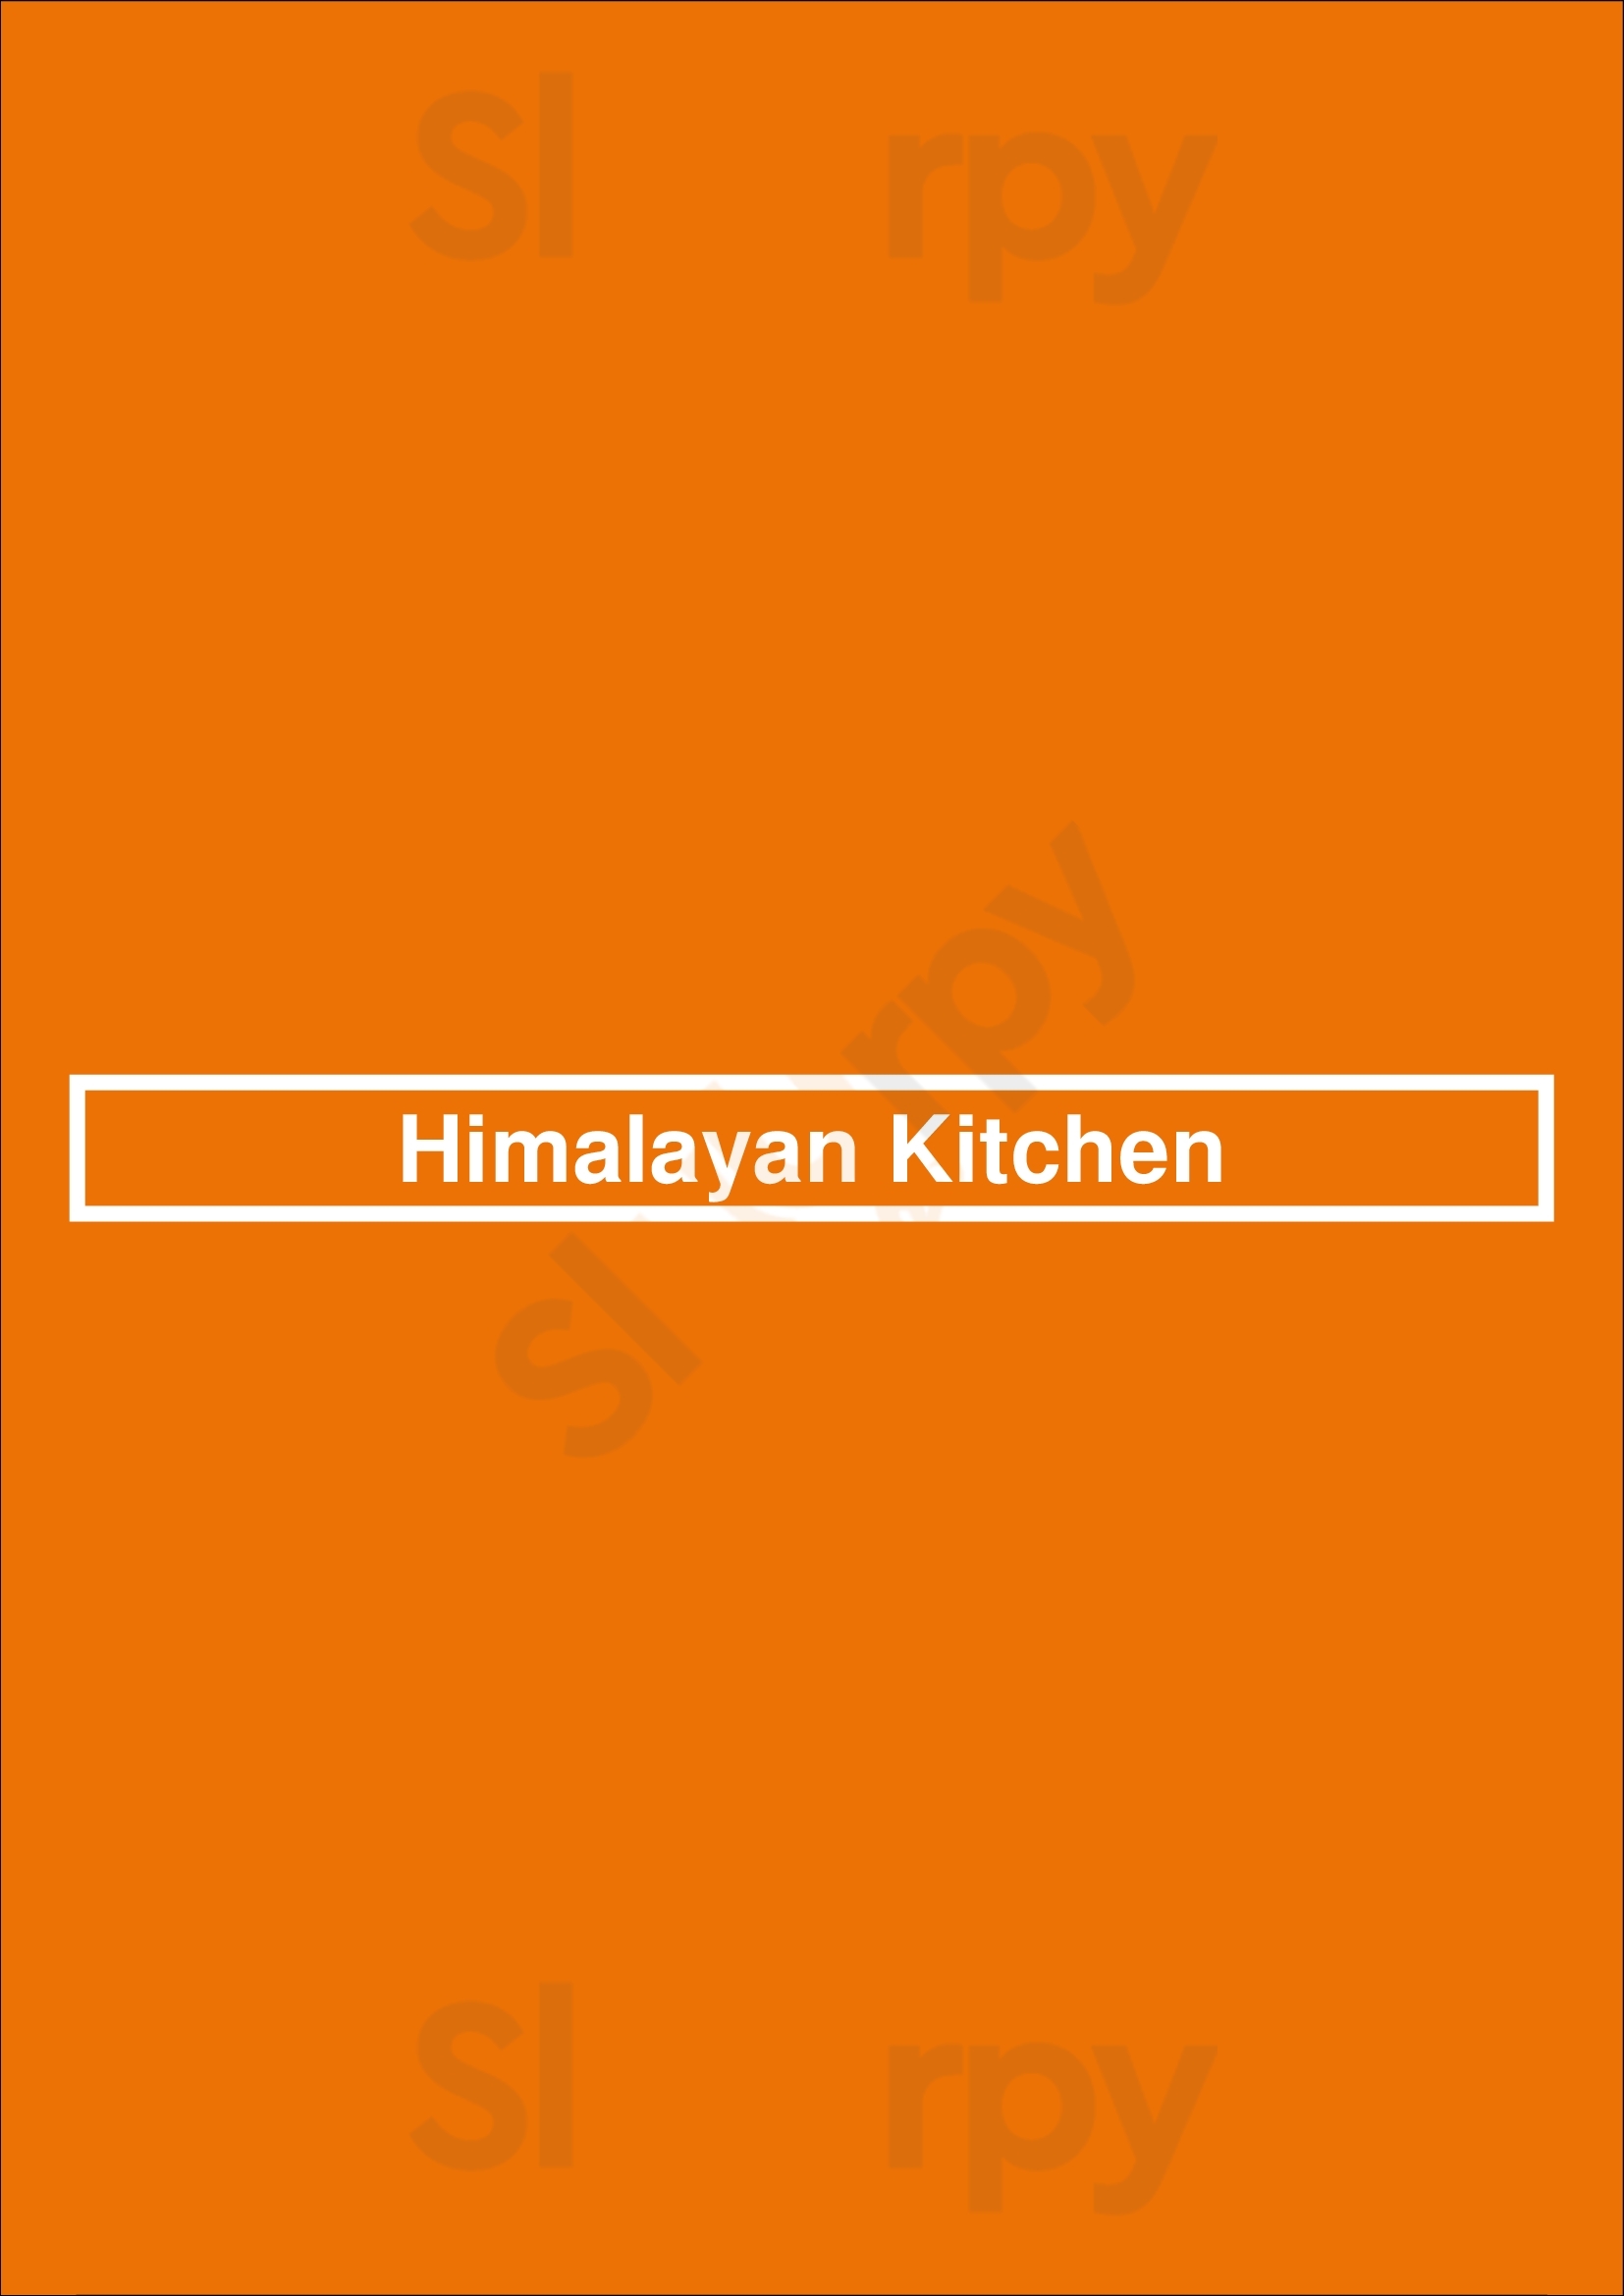 Himalayan Kitchen Amsterdam Menu - 1